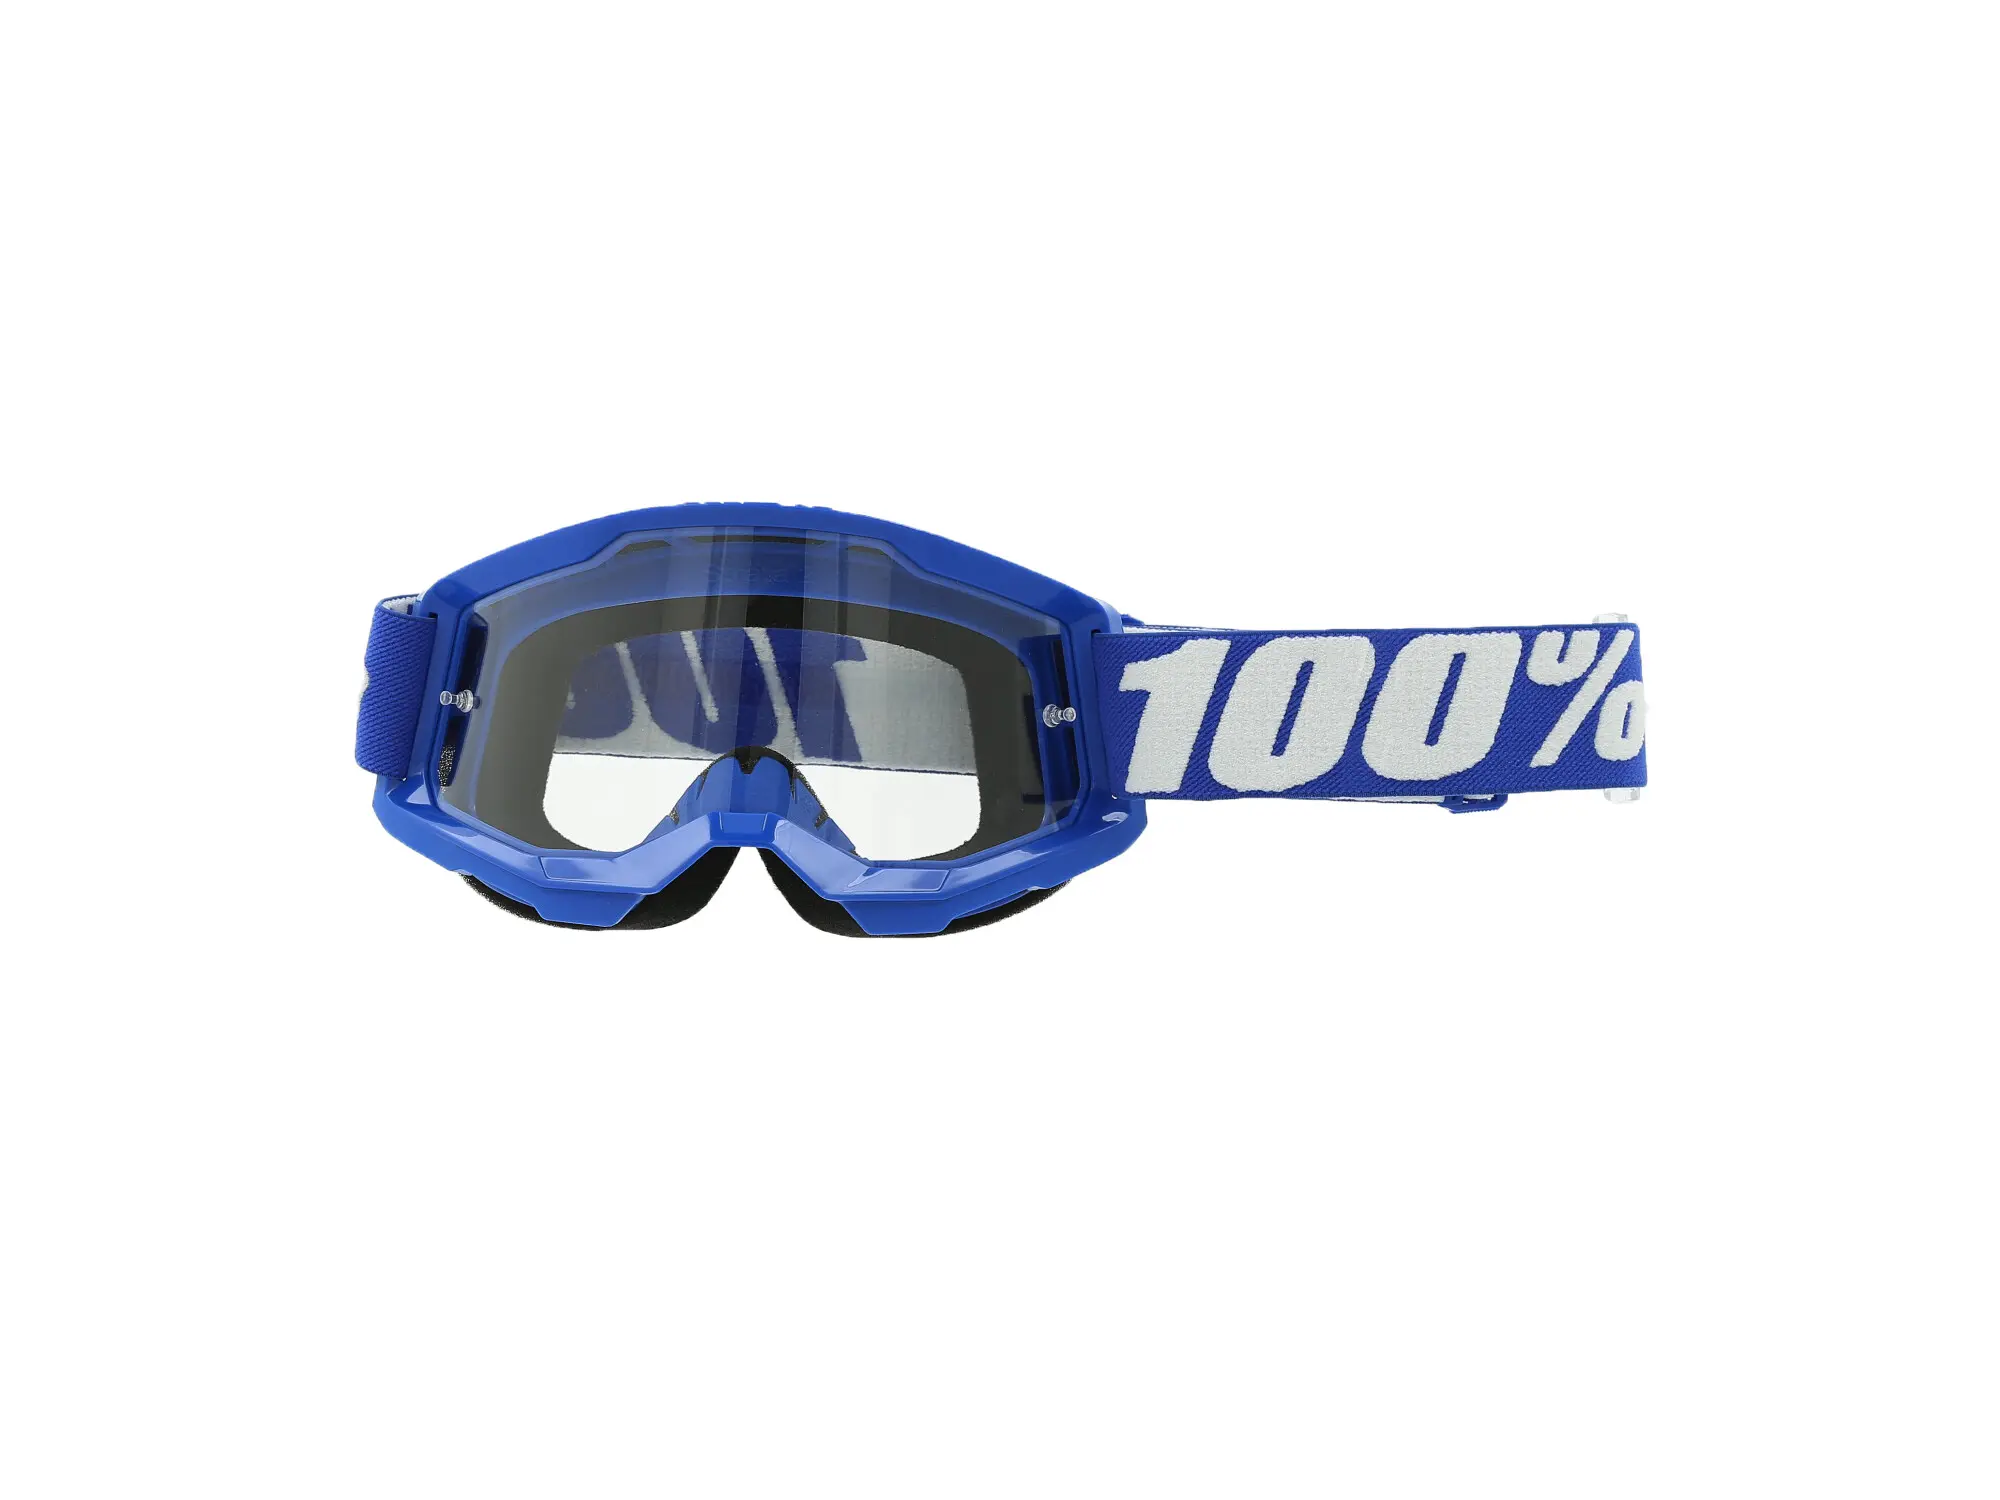 100% Motocross Brille STRATA 2 - Blau / Klar, Art.-Nr.: 10071983 - Bild 1